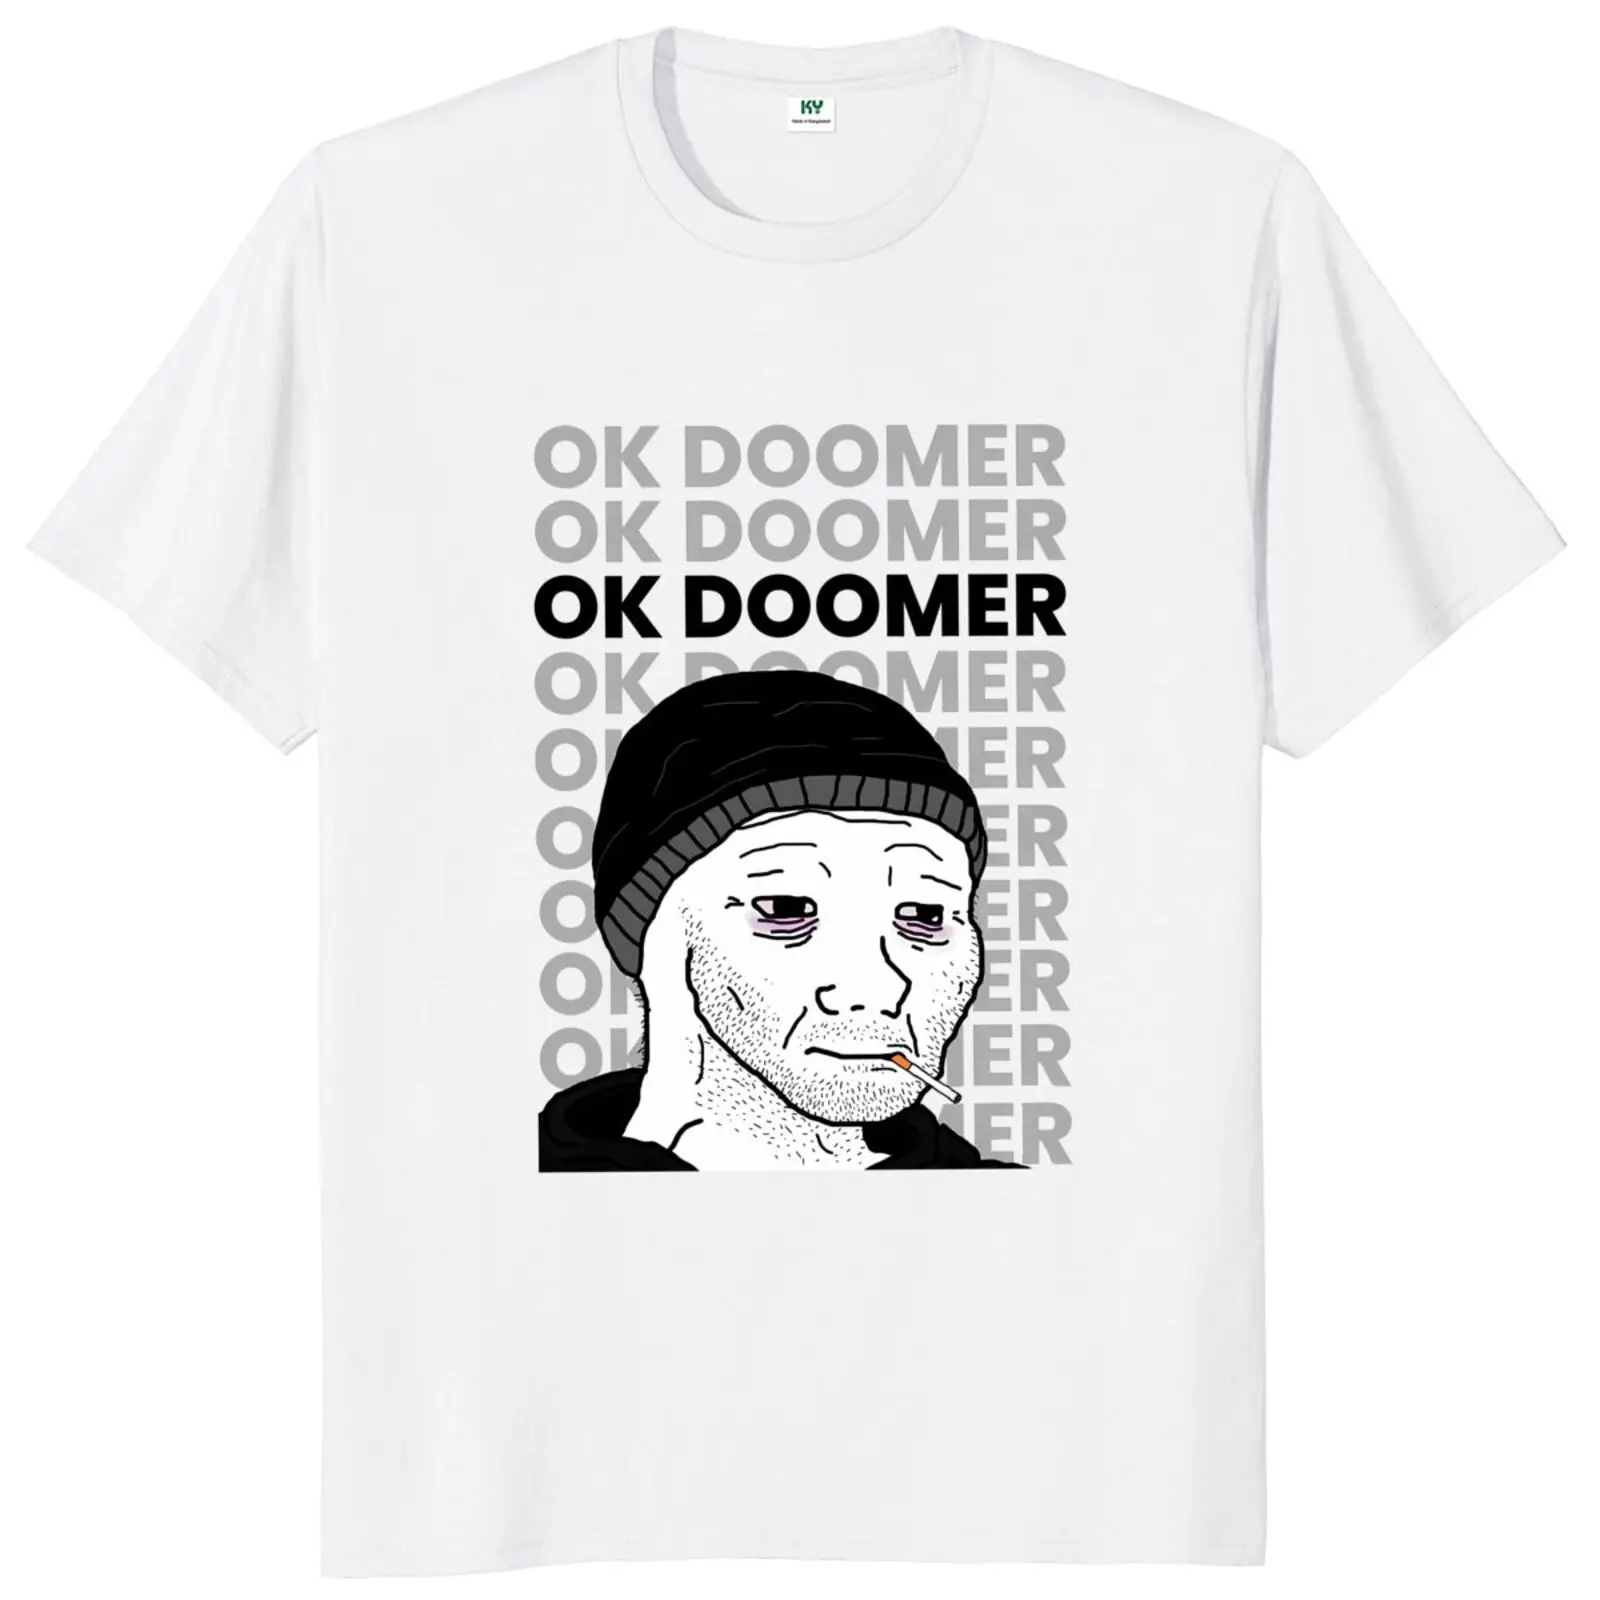 

Doomer T Shirt Introverted Funny Meme Geek Nerd Humor Gift Short Sleeve 100% Cotton Unisex Summer Soft T-shirts EU Size